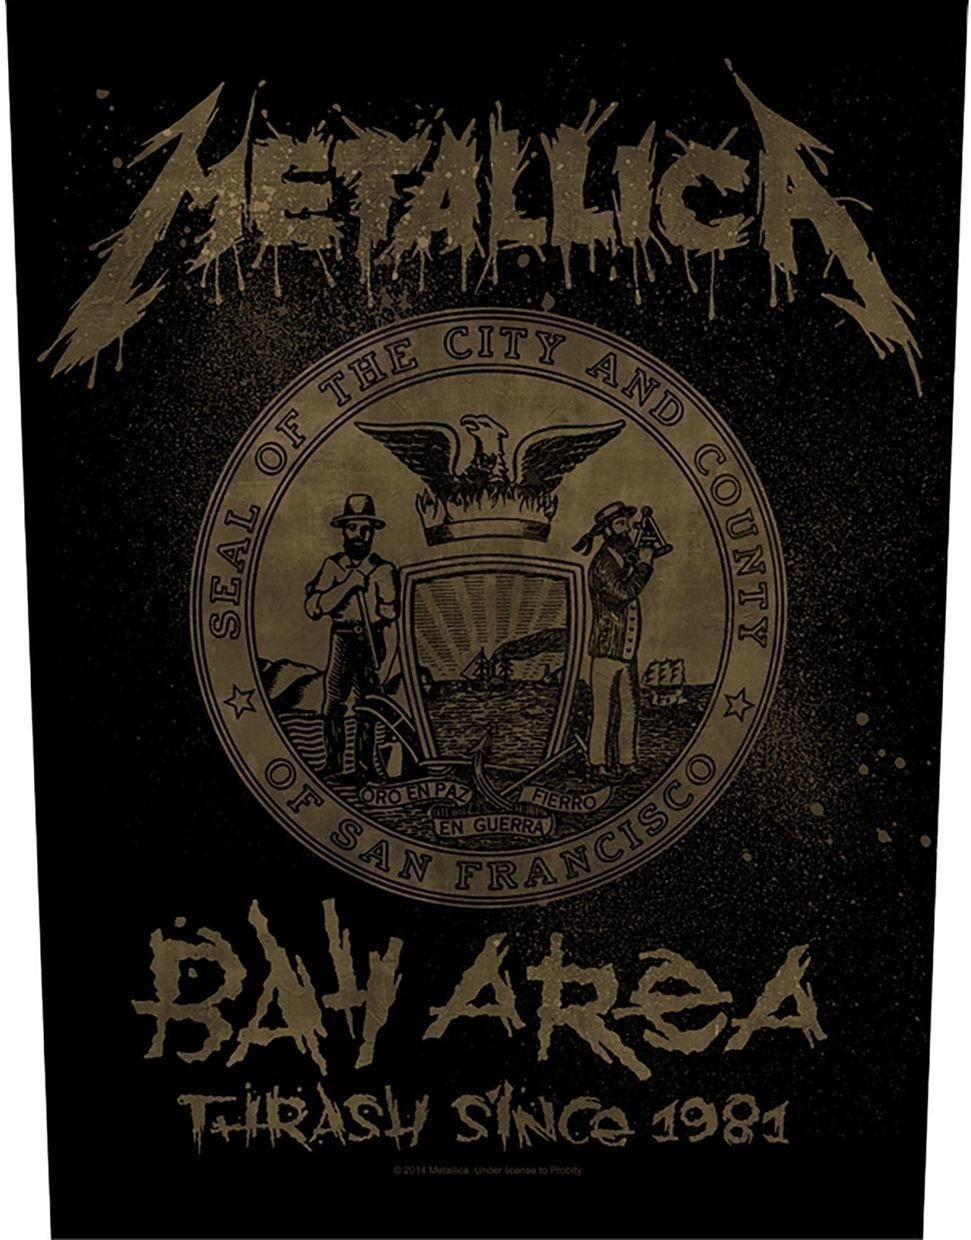 Parche Metallica Bay Area Thrash Parche